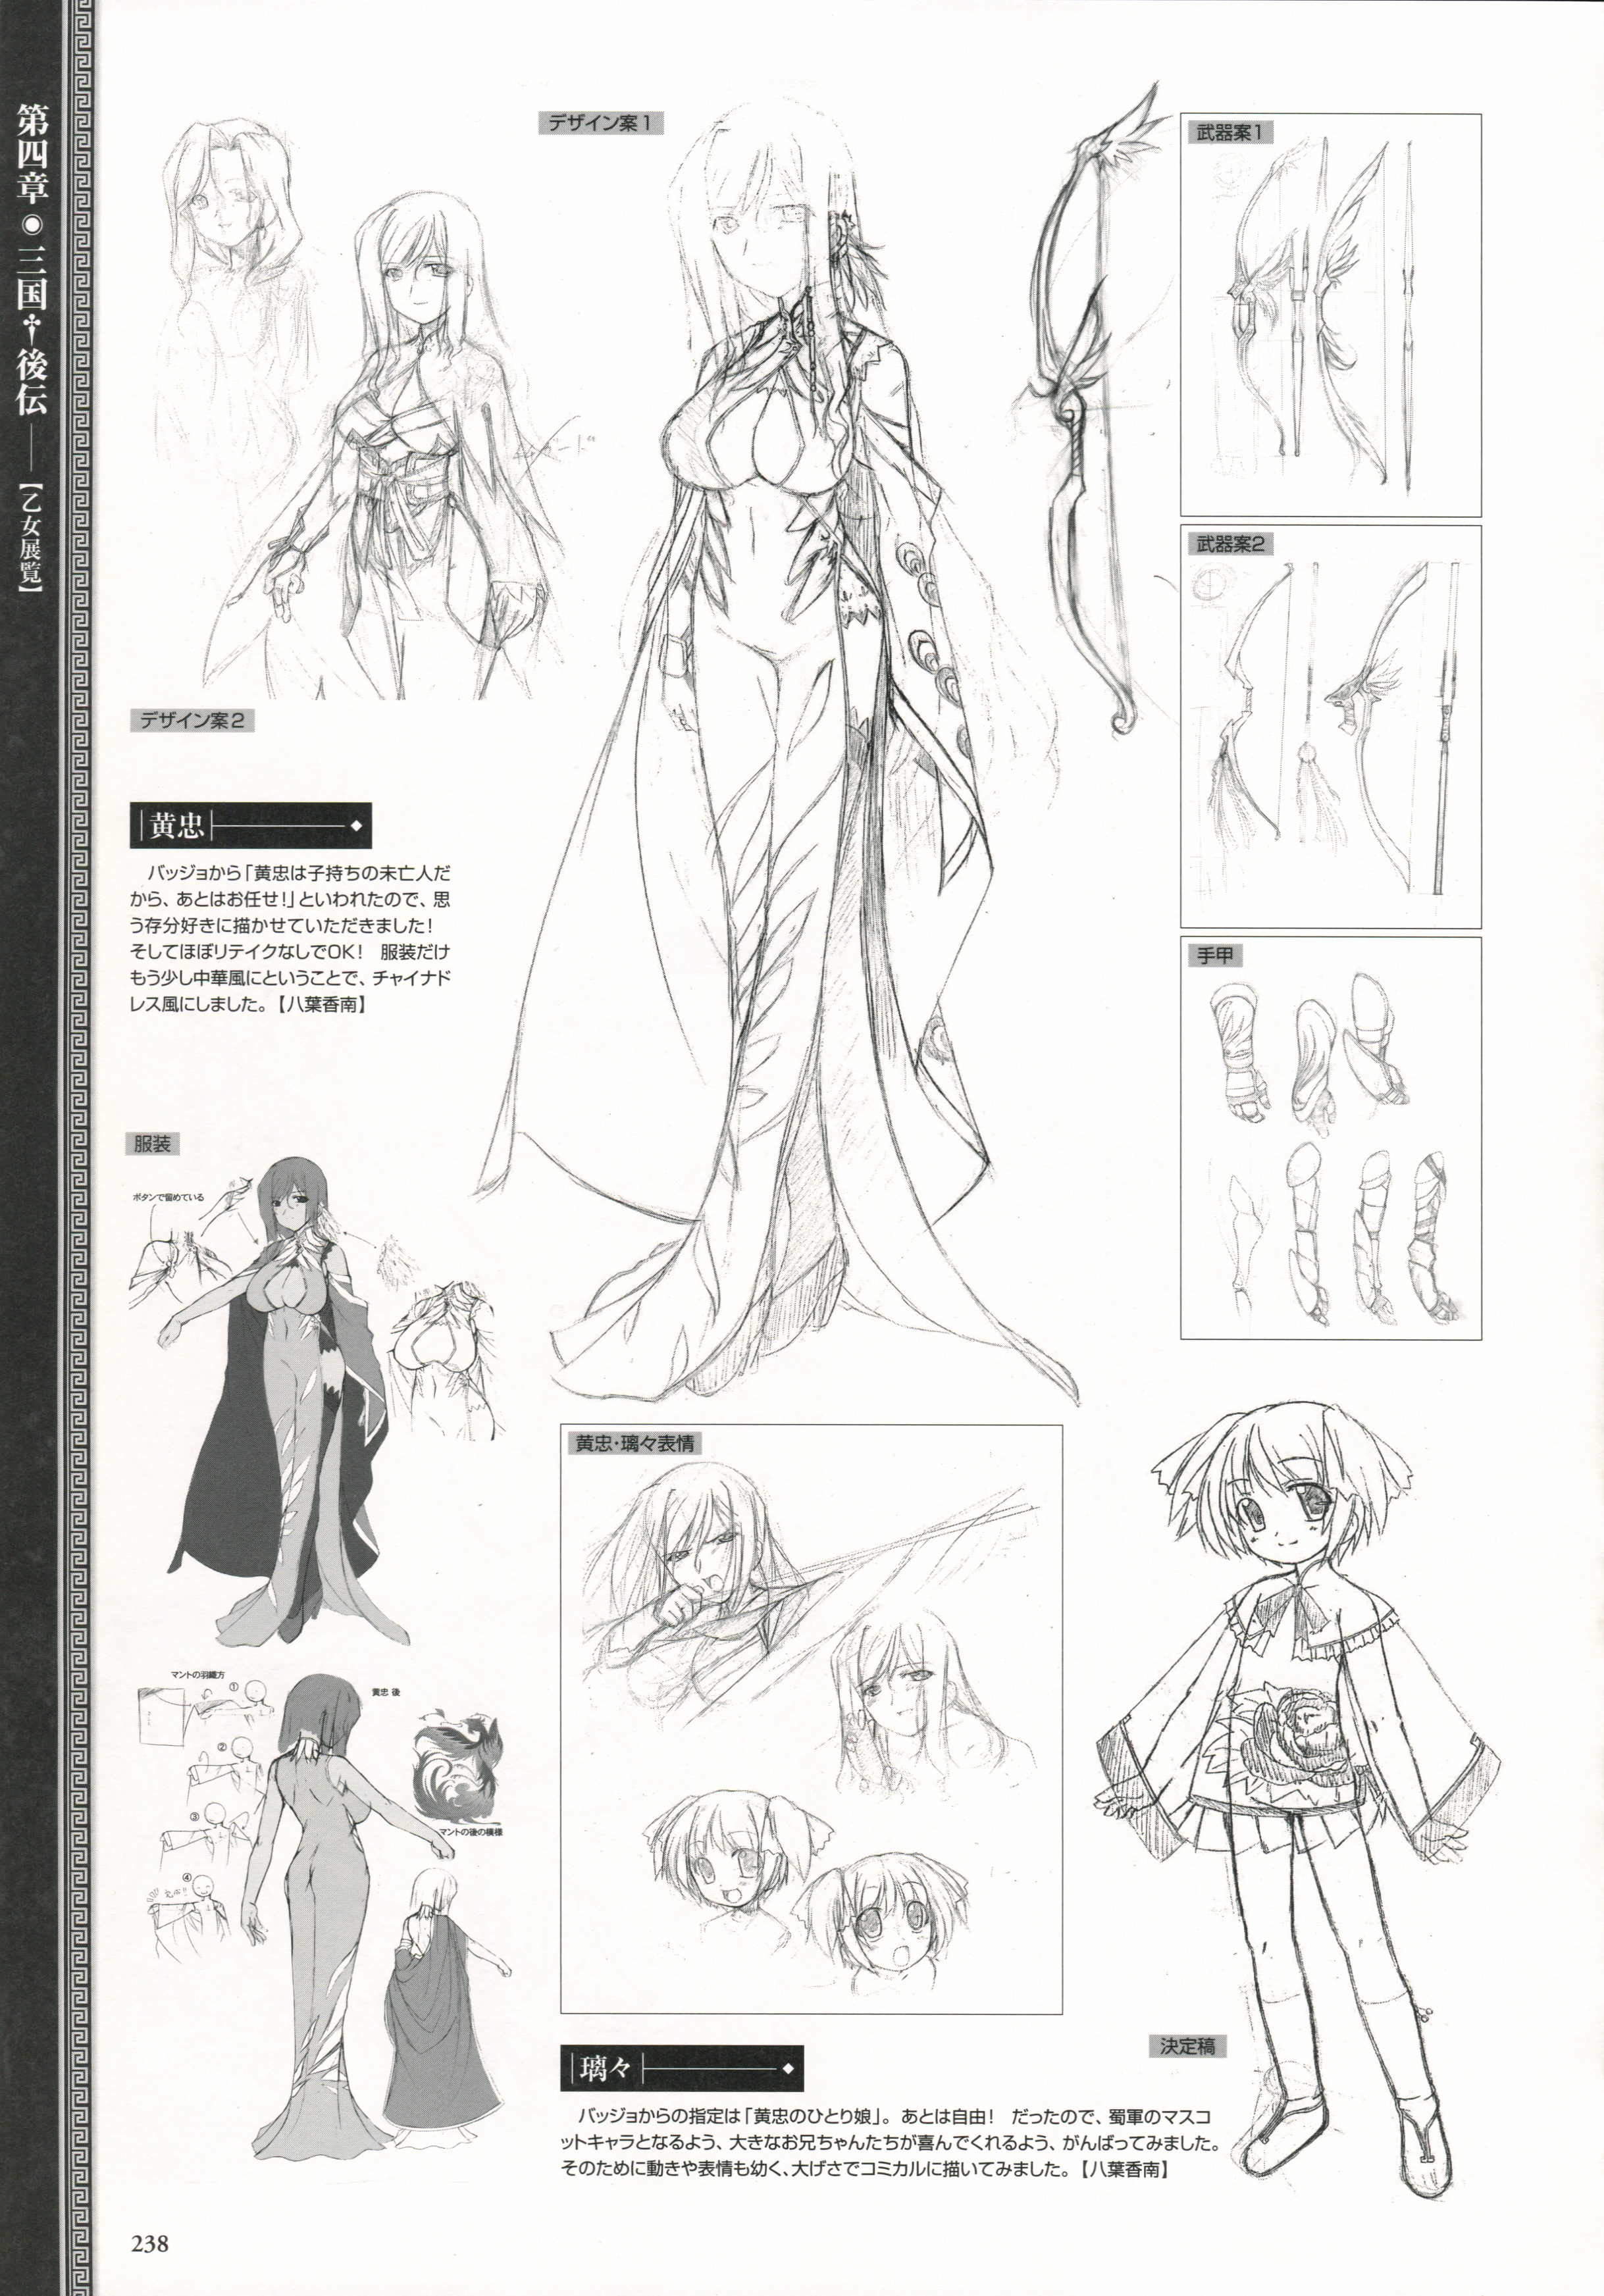 Baseson Koihime Musou Kouchuu Riri Character Design Monochrome Sketch Yande Re